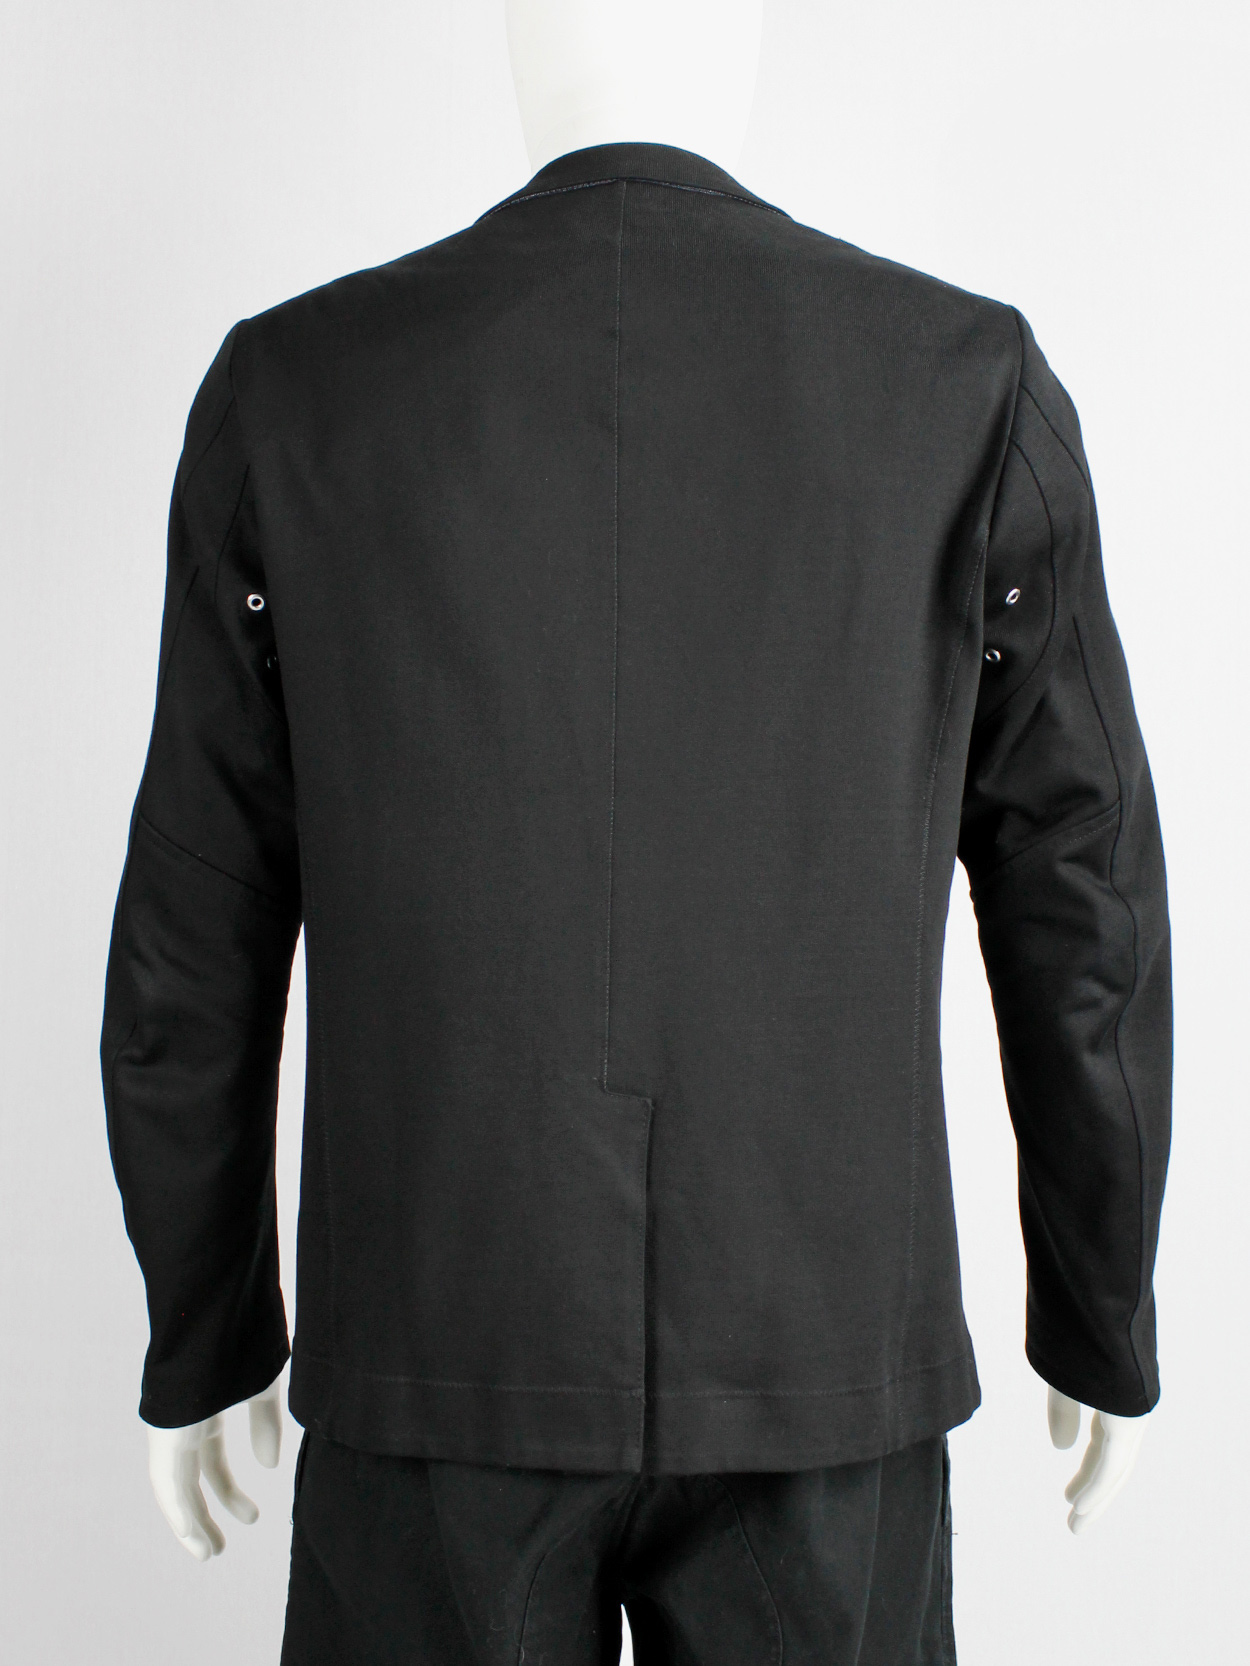 Junya Watanabe Man black blazer with biker details and panel stitching (6)